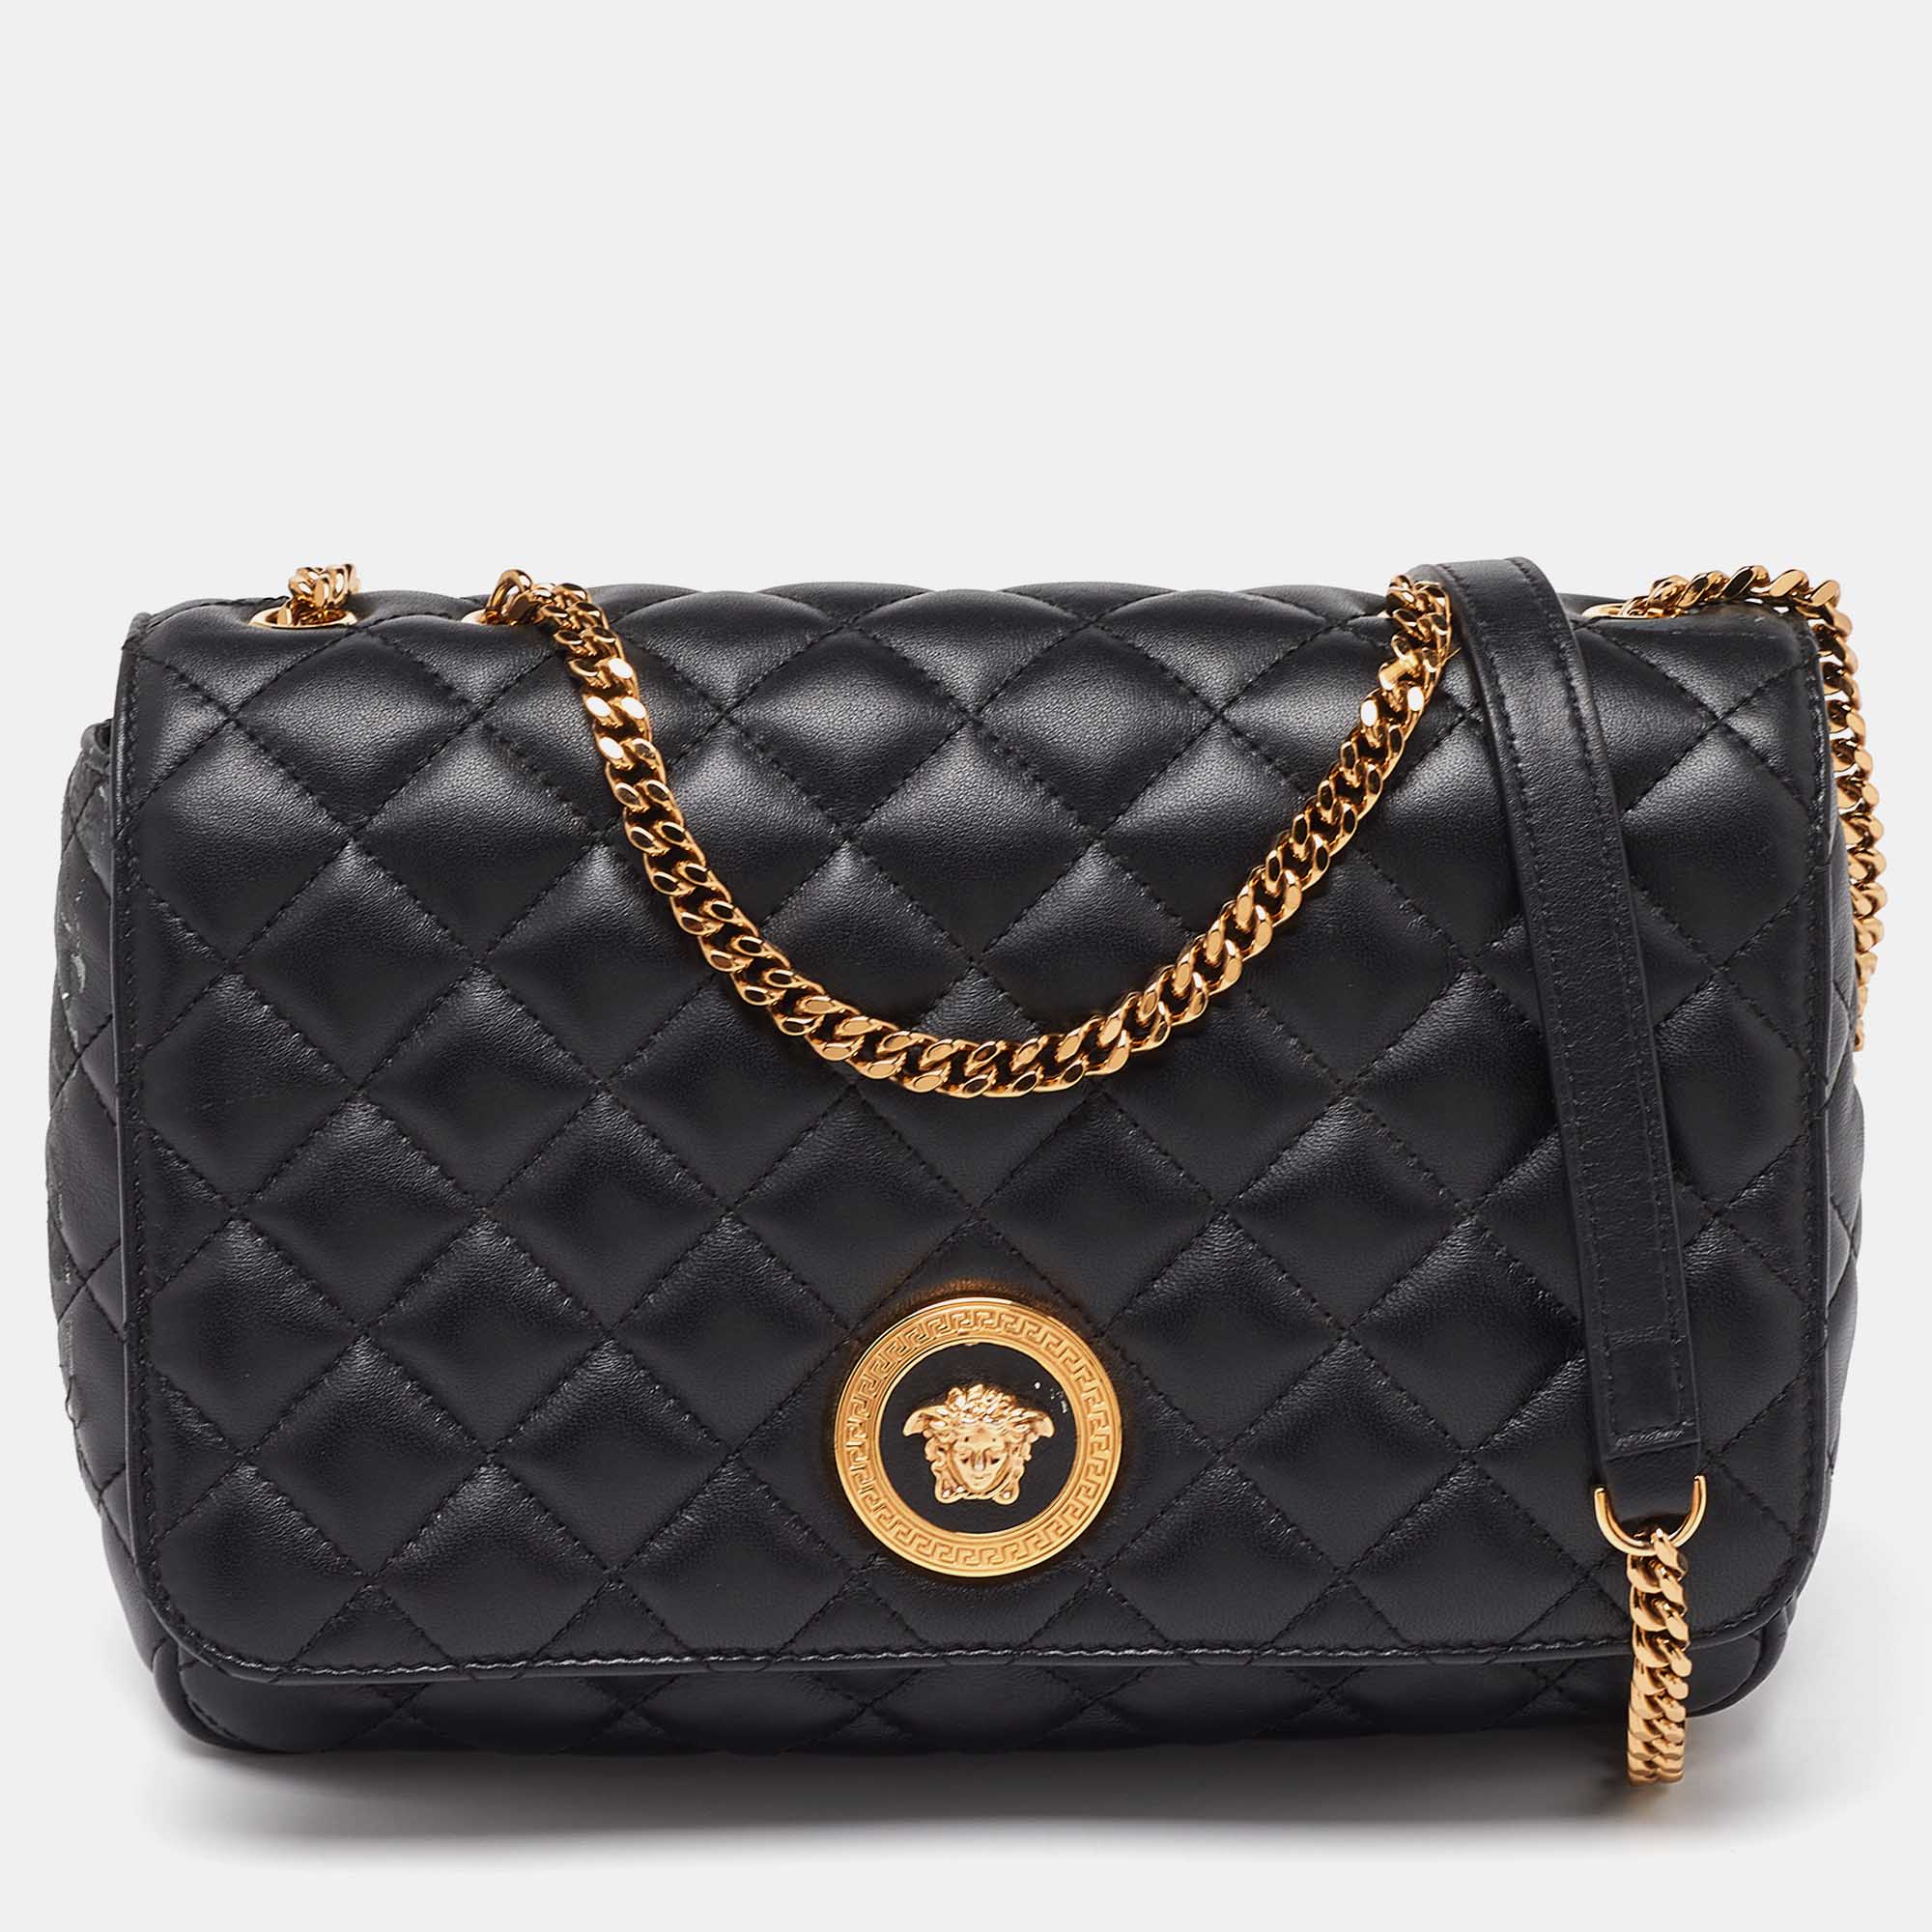 Pre-owned Versace Black Quilted Leather Medusa Chain Shoulder Bag